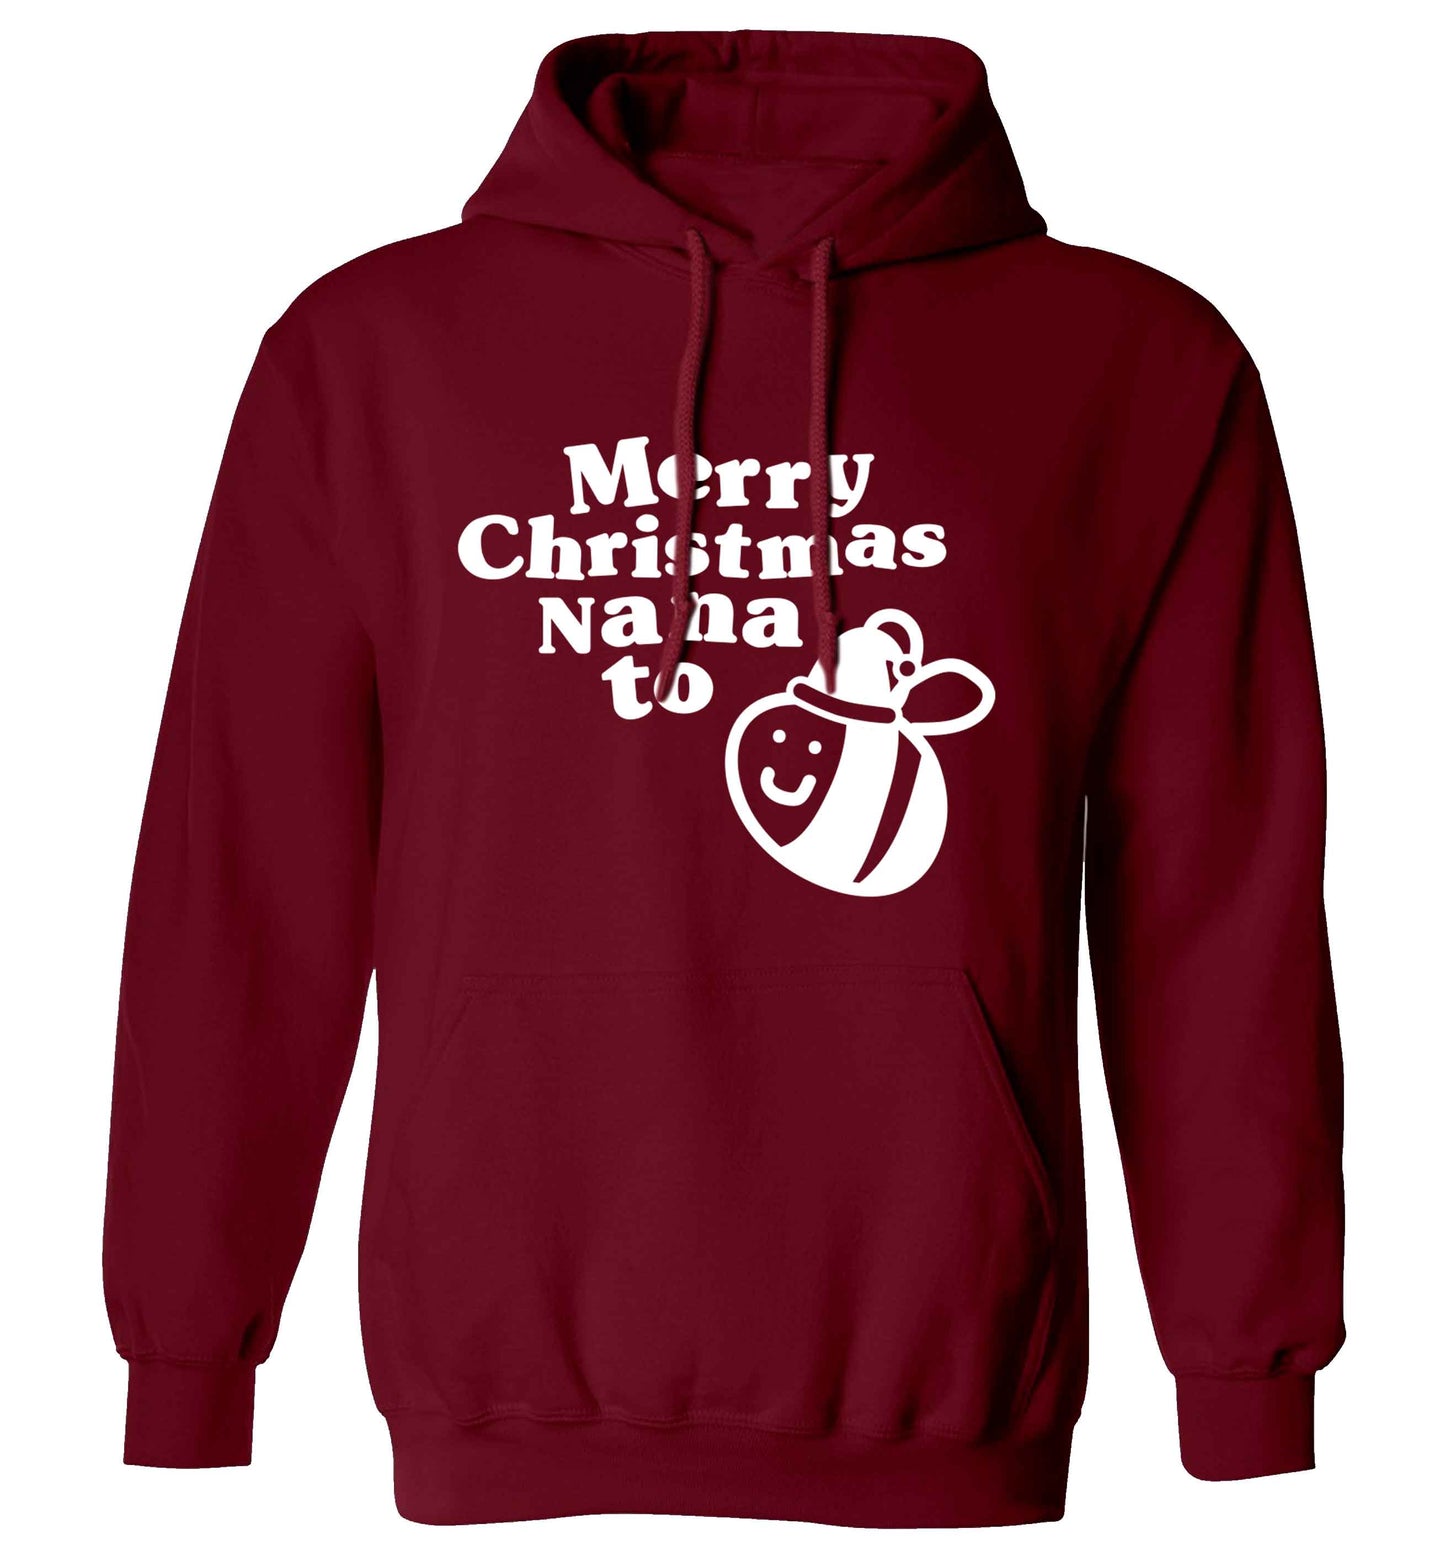 Merry Christmas nana to be adults unisex maroon hoodie 2XL